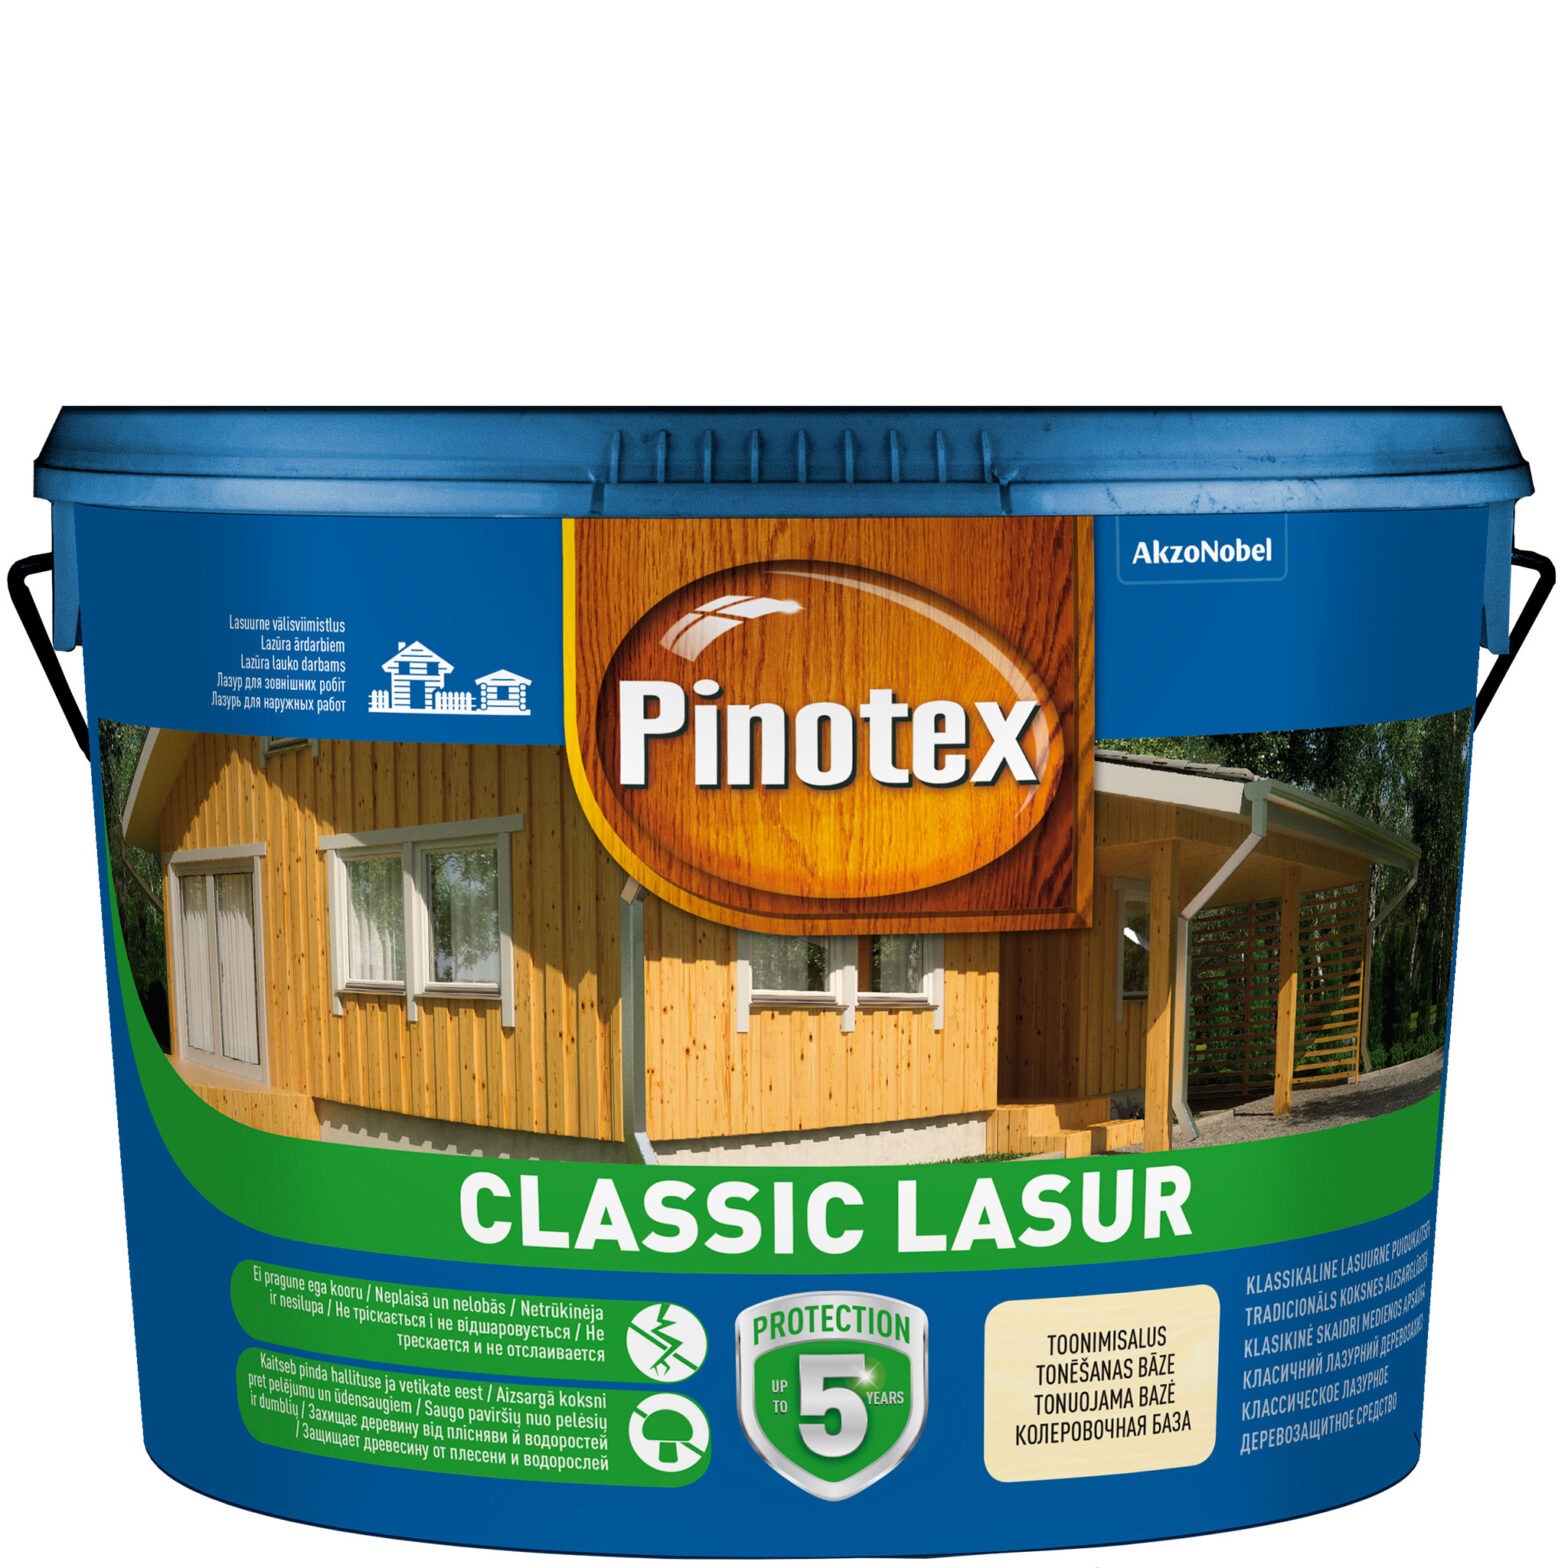 PINOTEX CLASSIC LASUR TEAK AE 10L